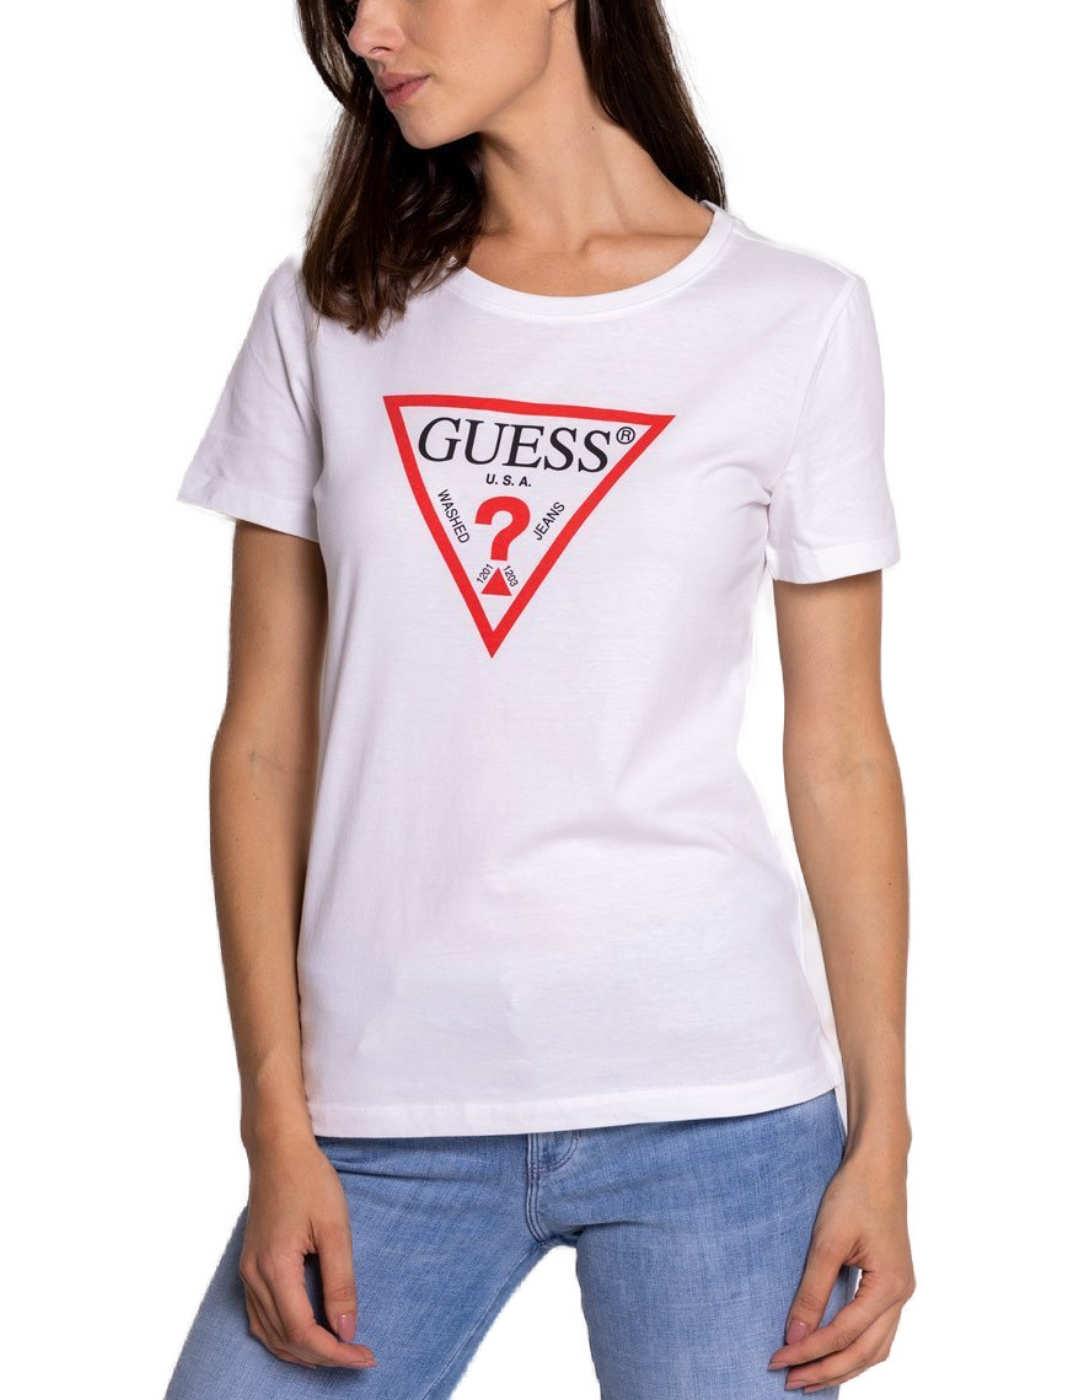 Puerto deficiencia Útil Camiseta Guess original basica blanco para mujer-z